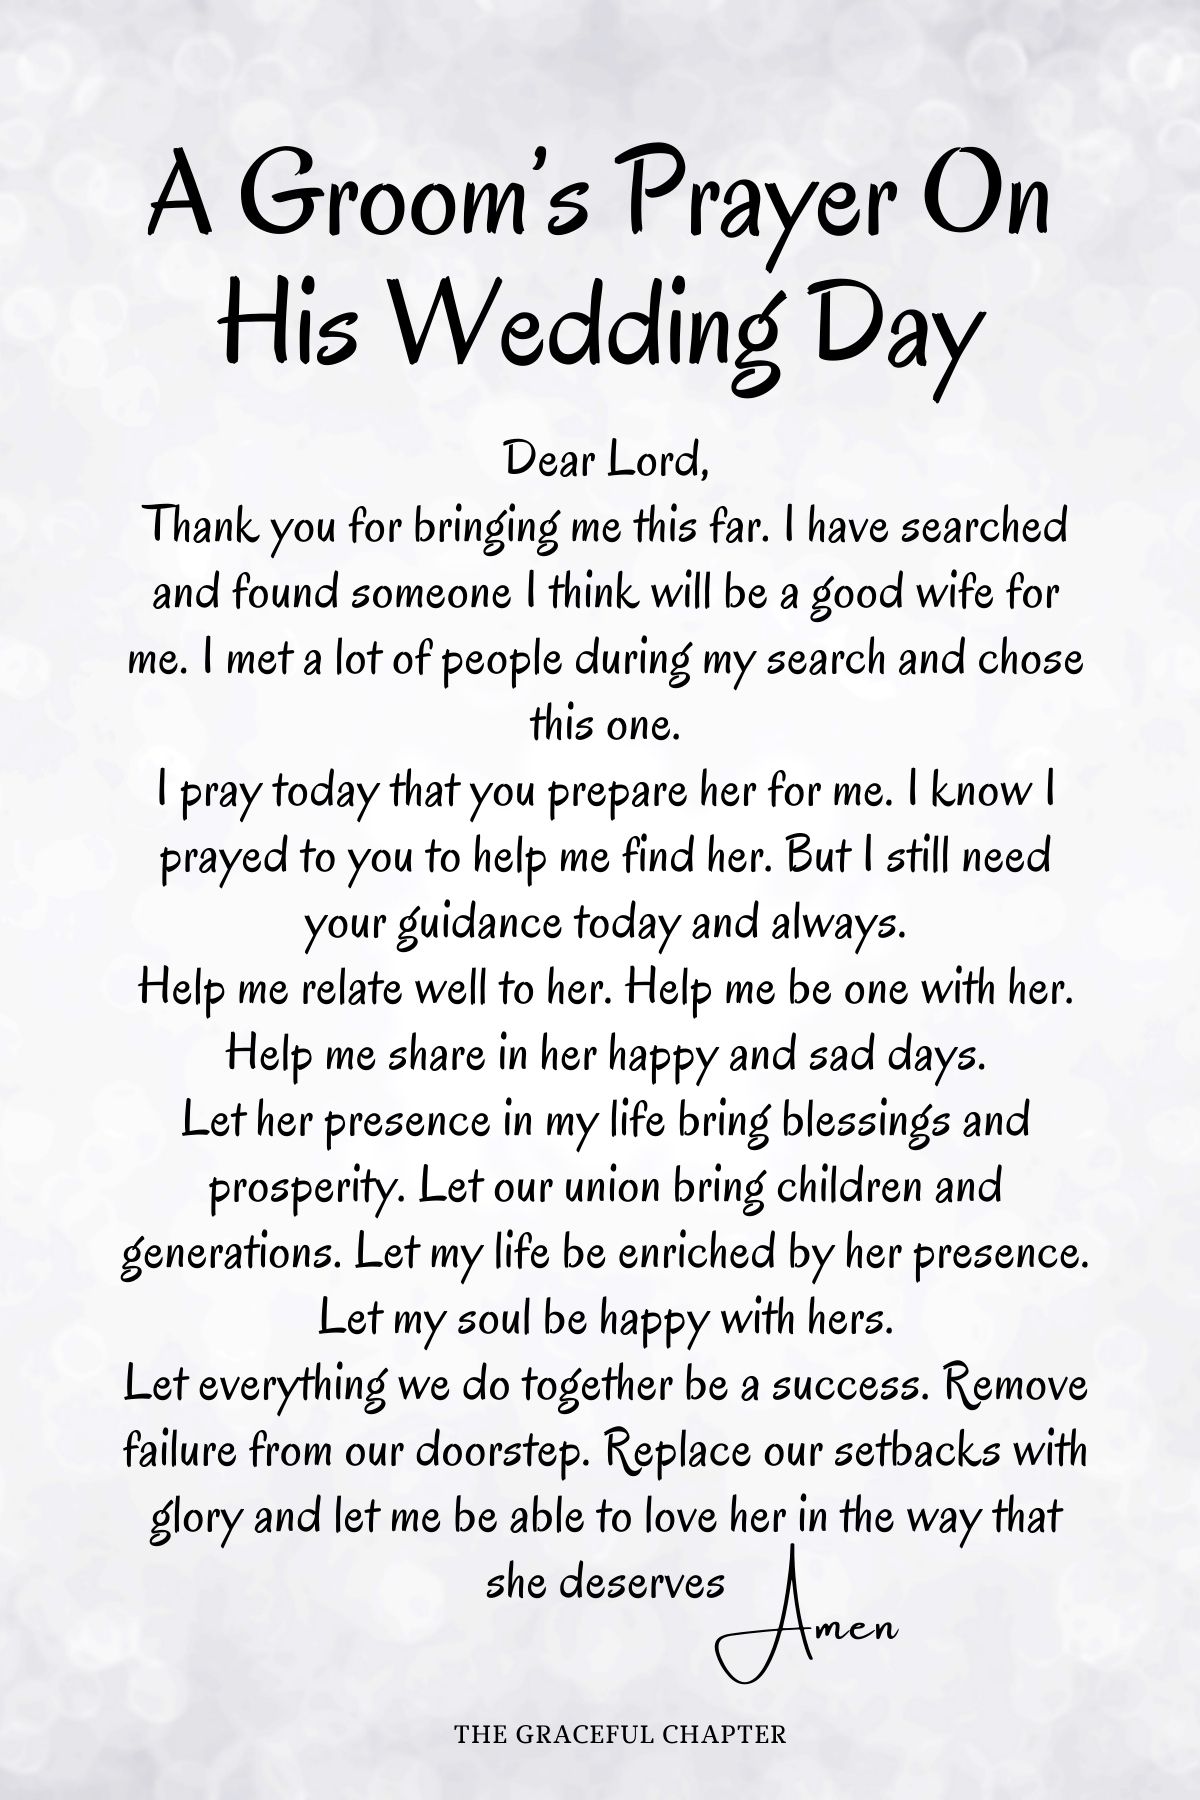 A groom’s prayer on his wedding day